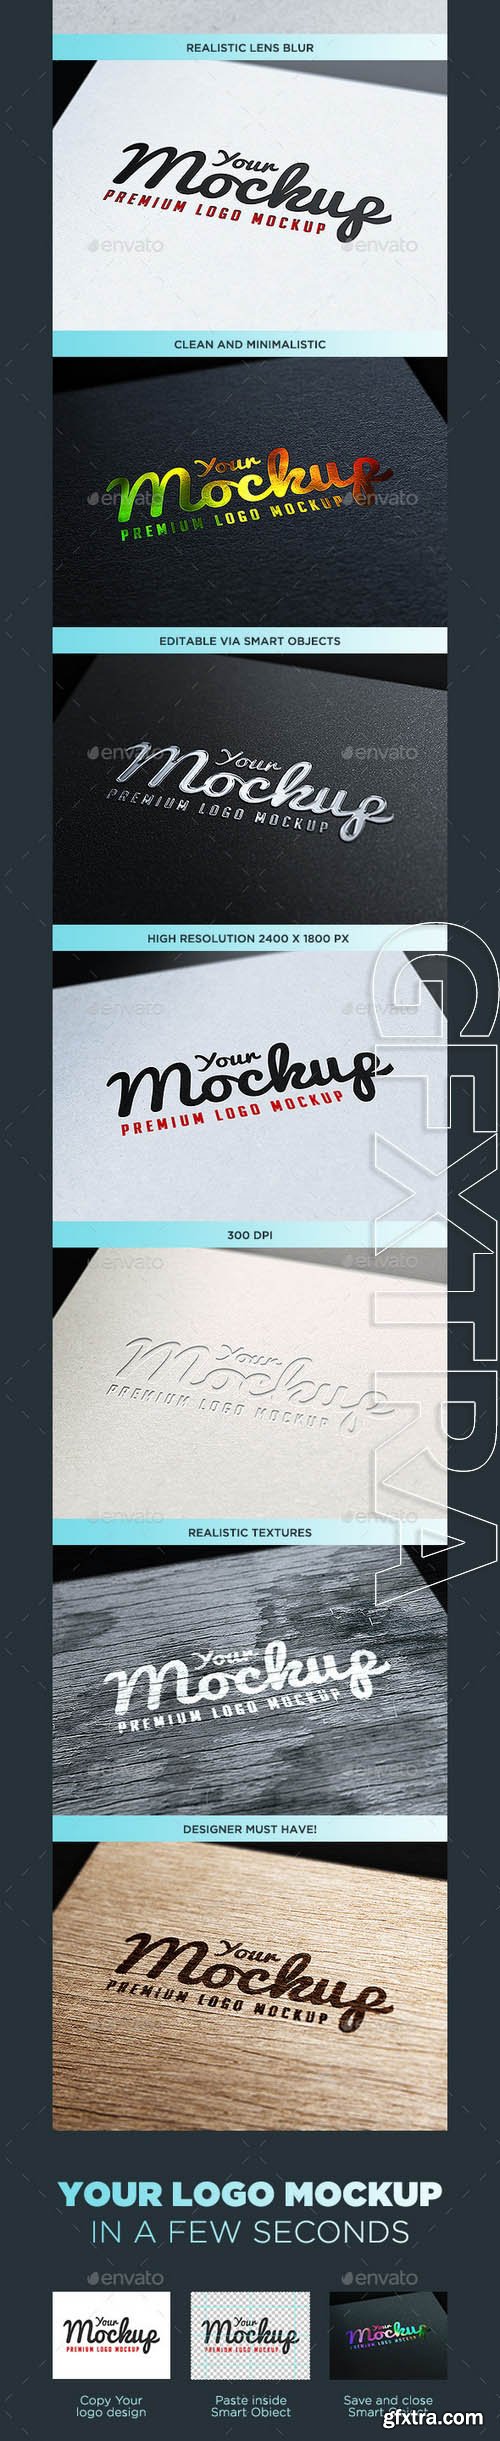 Your Mockup - Logo Mockups VOL.1 - GraphicRiver